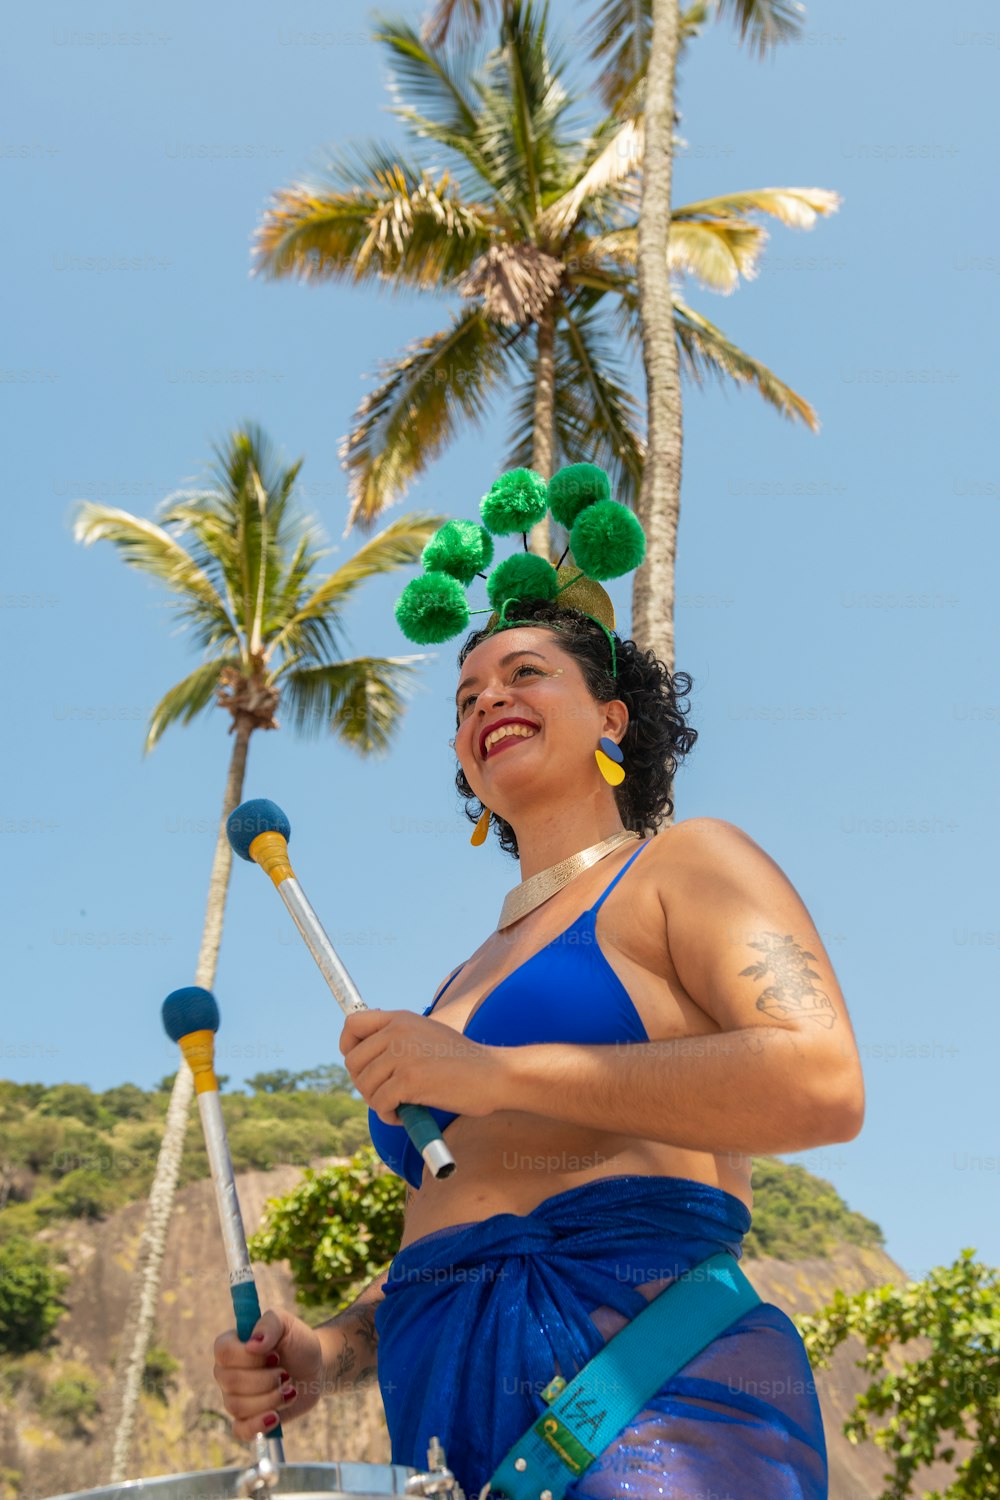 Une femme en bikini bleu tenant un poteau